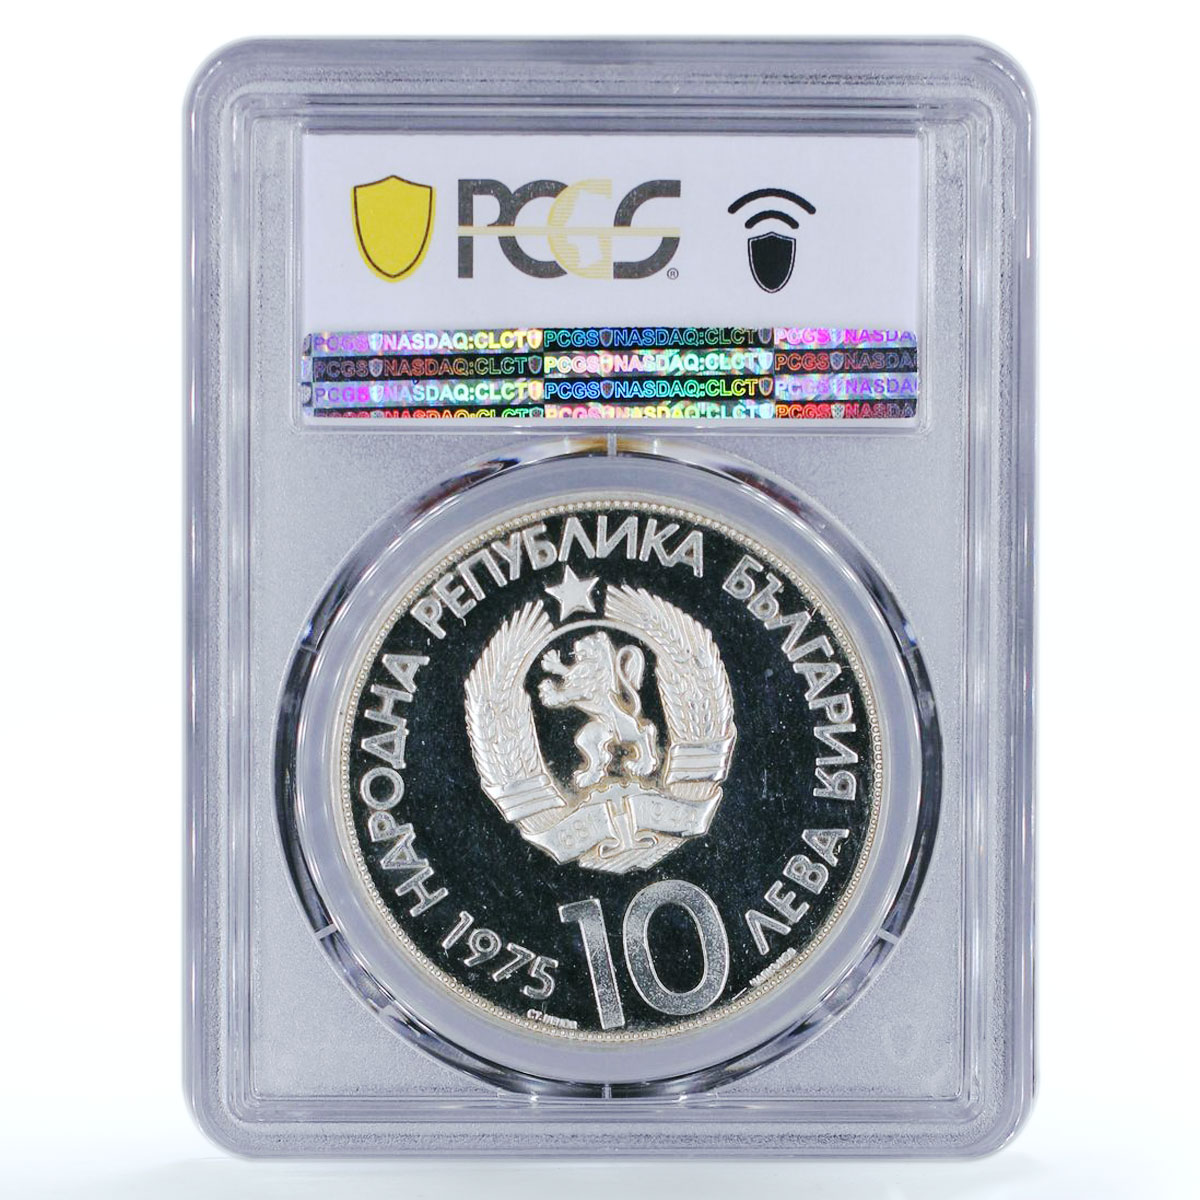 Bulgaria 10 leva Olympic Games Athlets Cyrillic Edge PR66 PCGS silver coin 1975